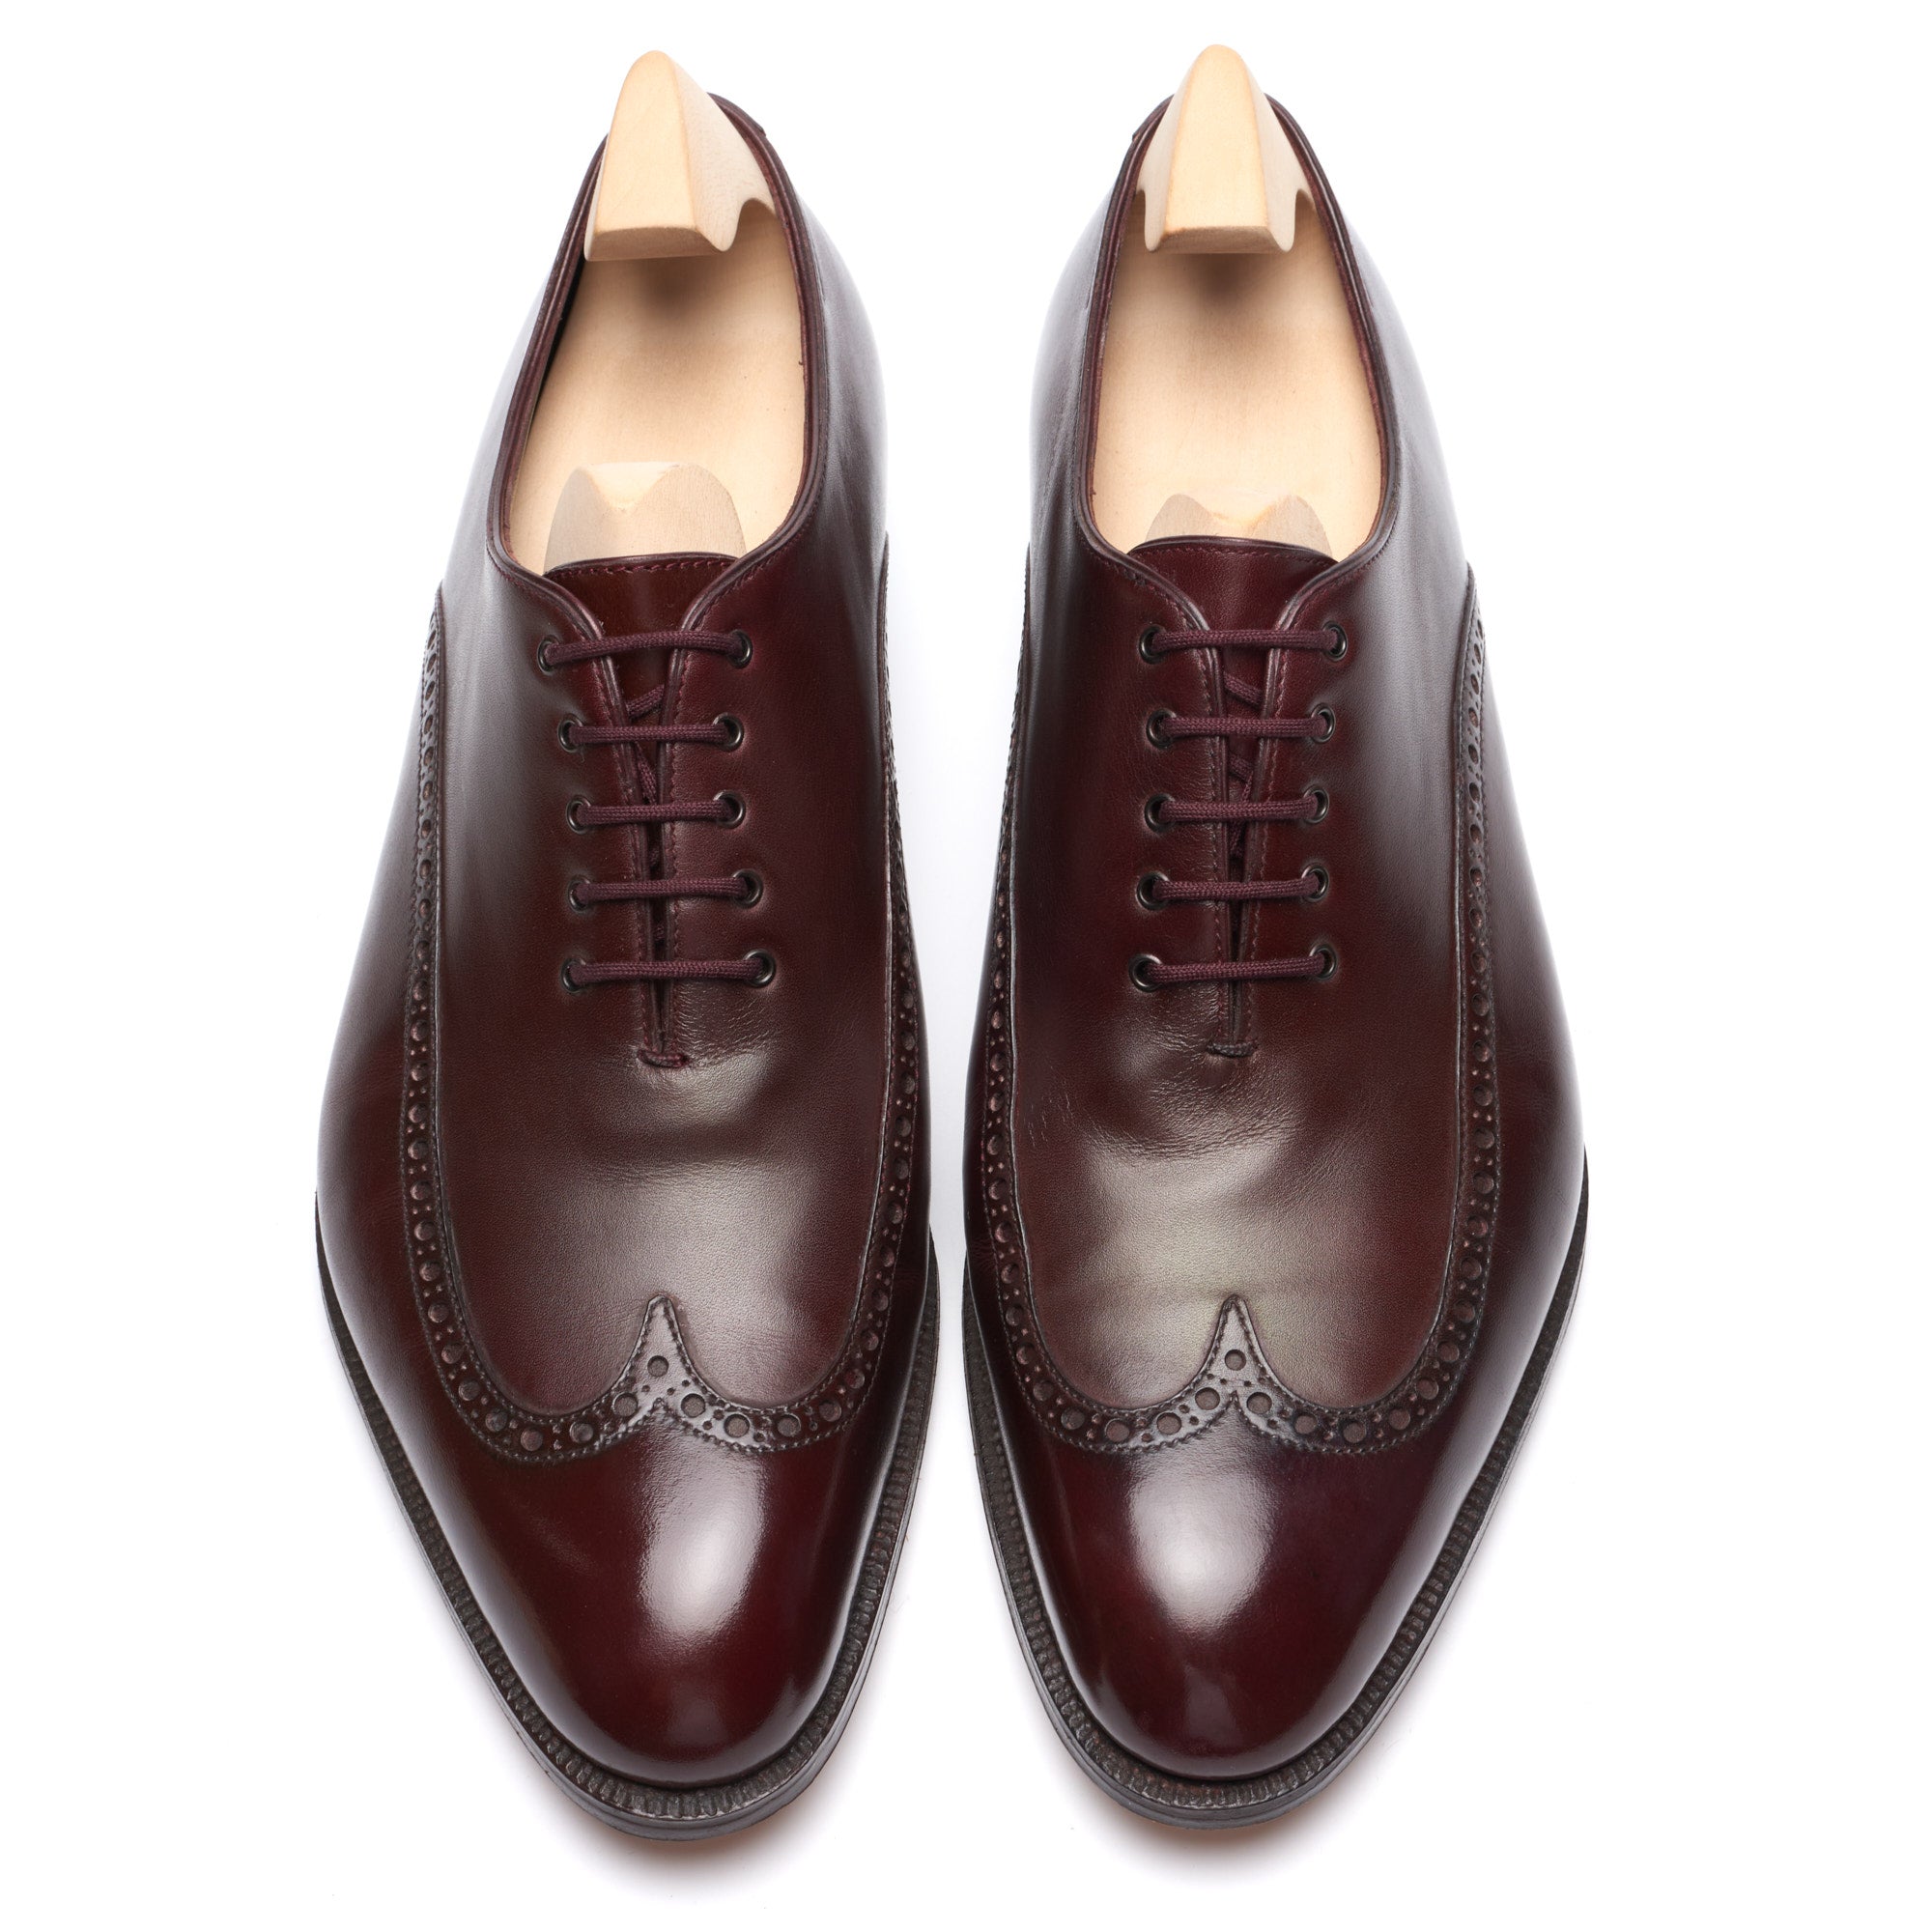 JOHN LOBB Paris Bespoke Dark Cherry Leather Oxford Shoes 7.5D US 8.5 NEW JOHN LOBB